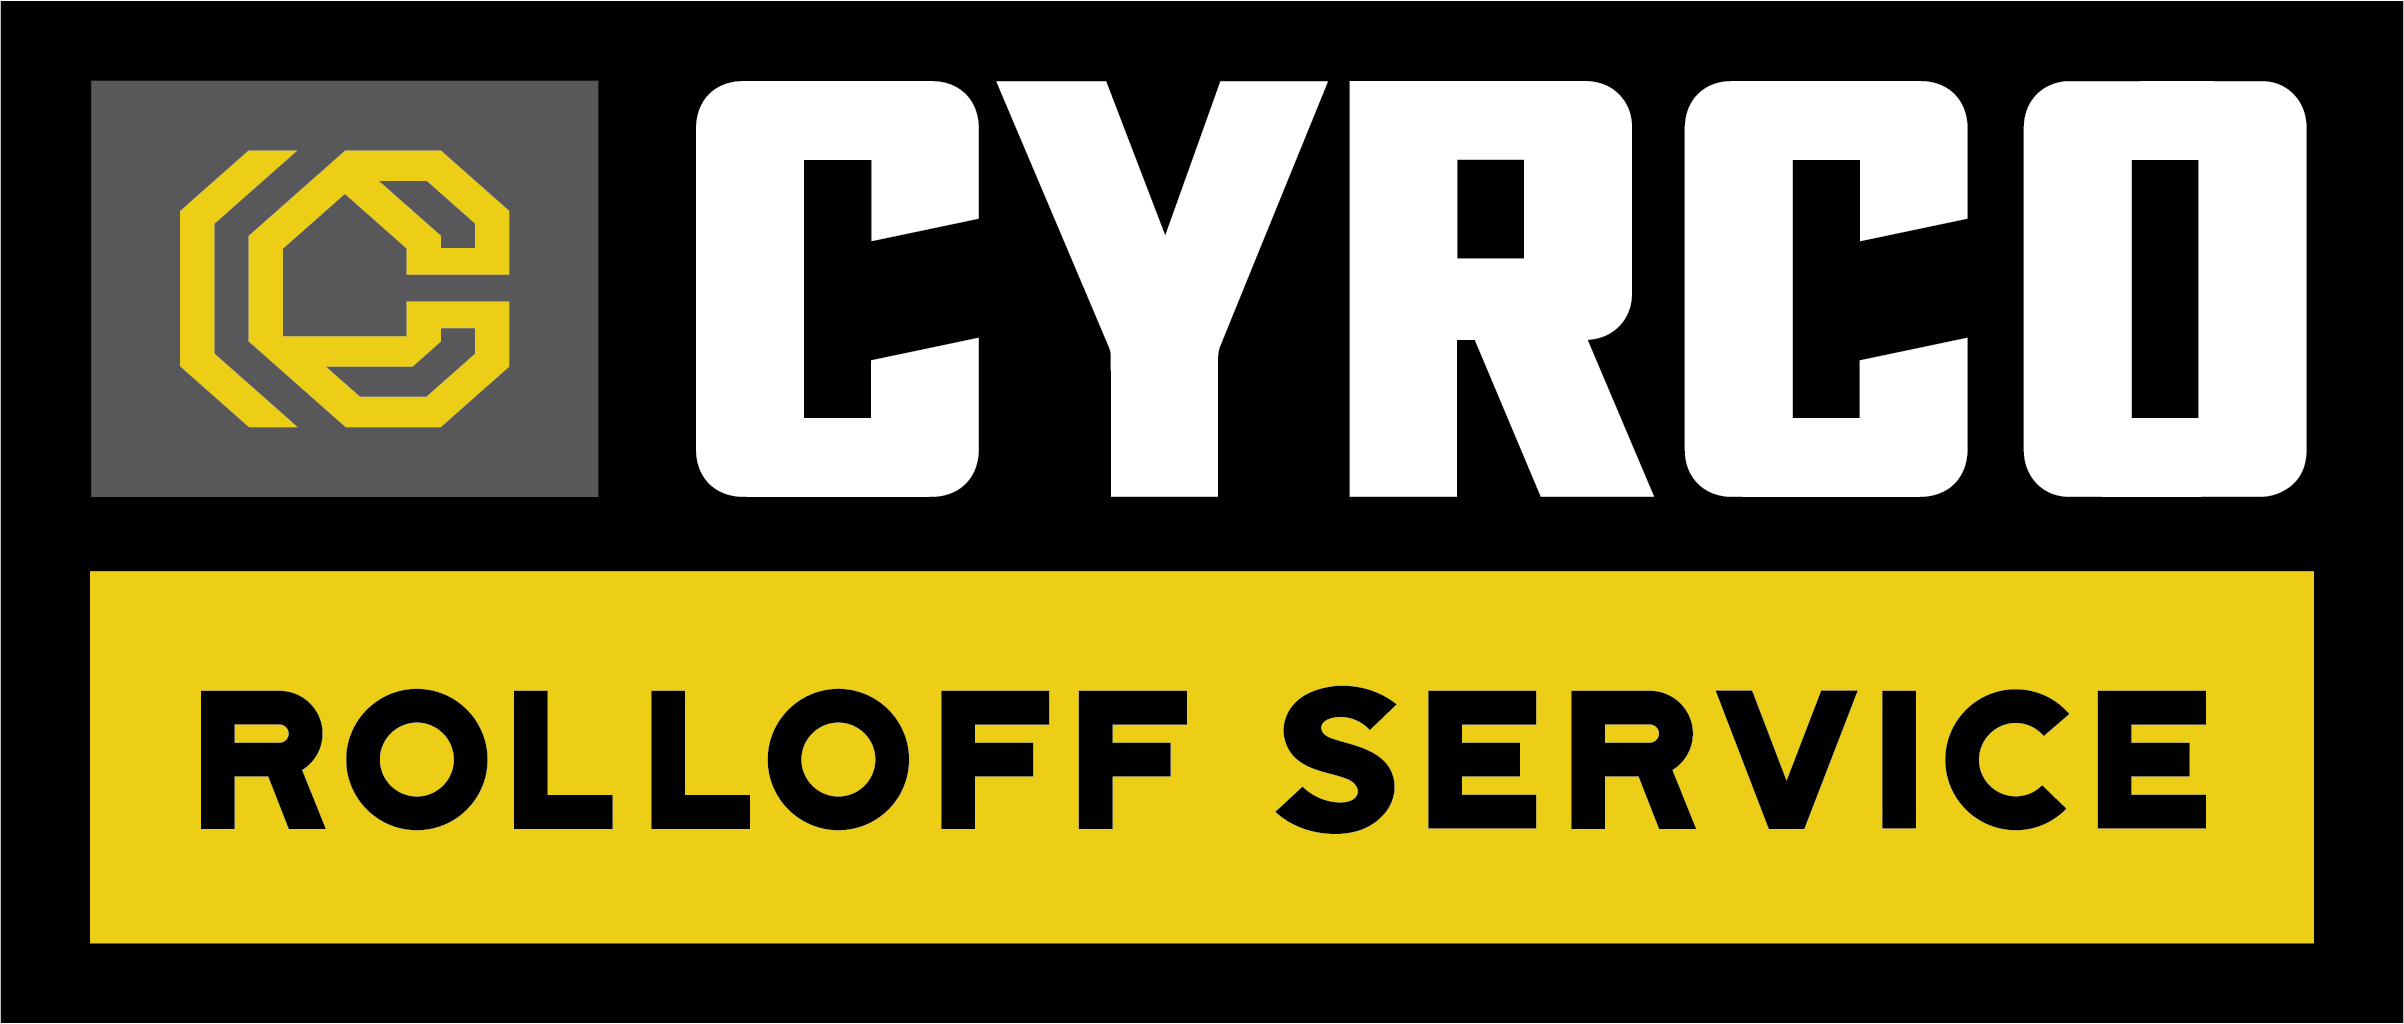 CYRCO ROLLOFF SERVICE